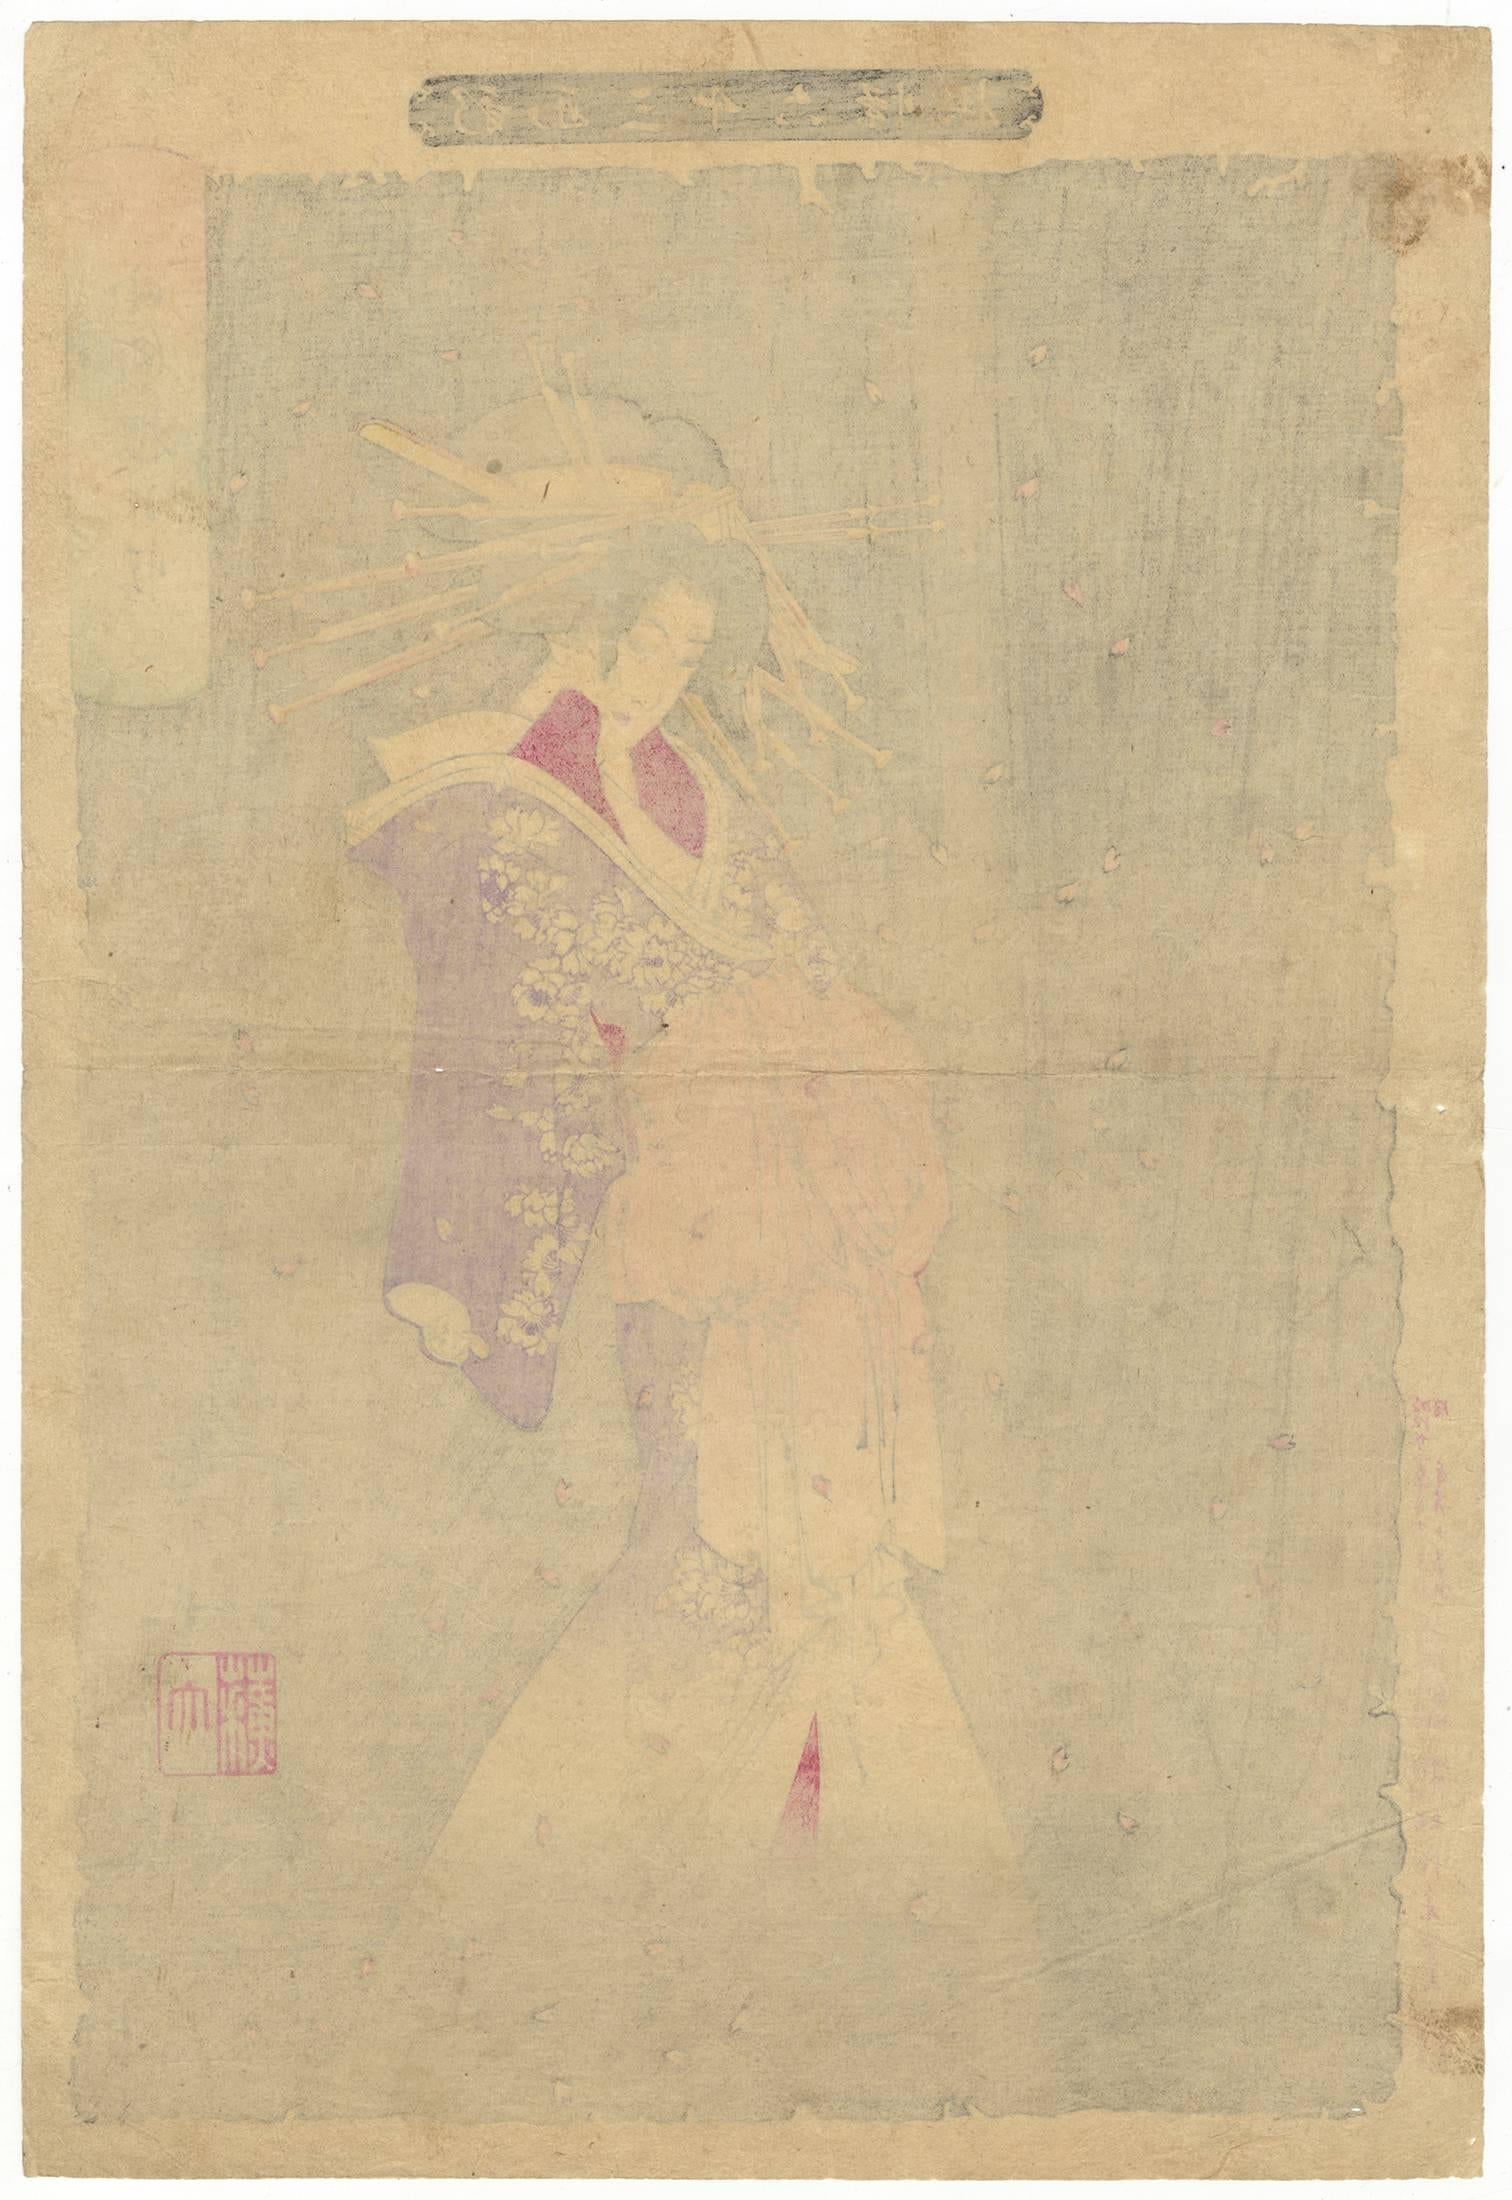 Artist: Yoshitoshi Tsukioka (1839-1892)
Title: The Spirit of the Komachi cherry tree
Series: 'New Forms of Thirty-six Ghosts'
Publisher: Sasaki Toyokichi 
Published: 1889

The courtesan in this print wears an elaborate kimono. A number of